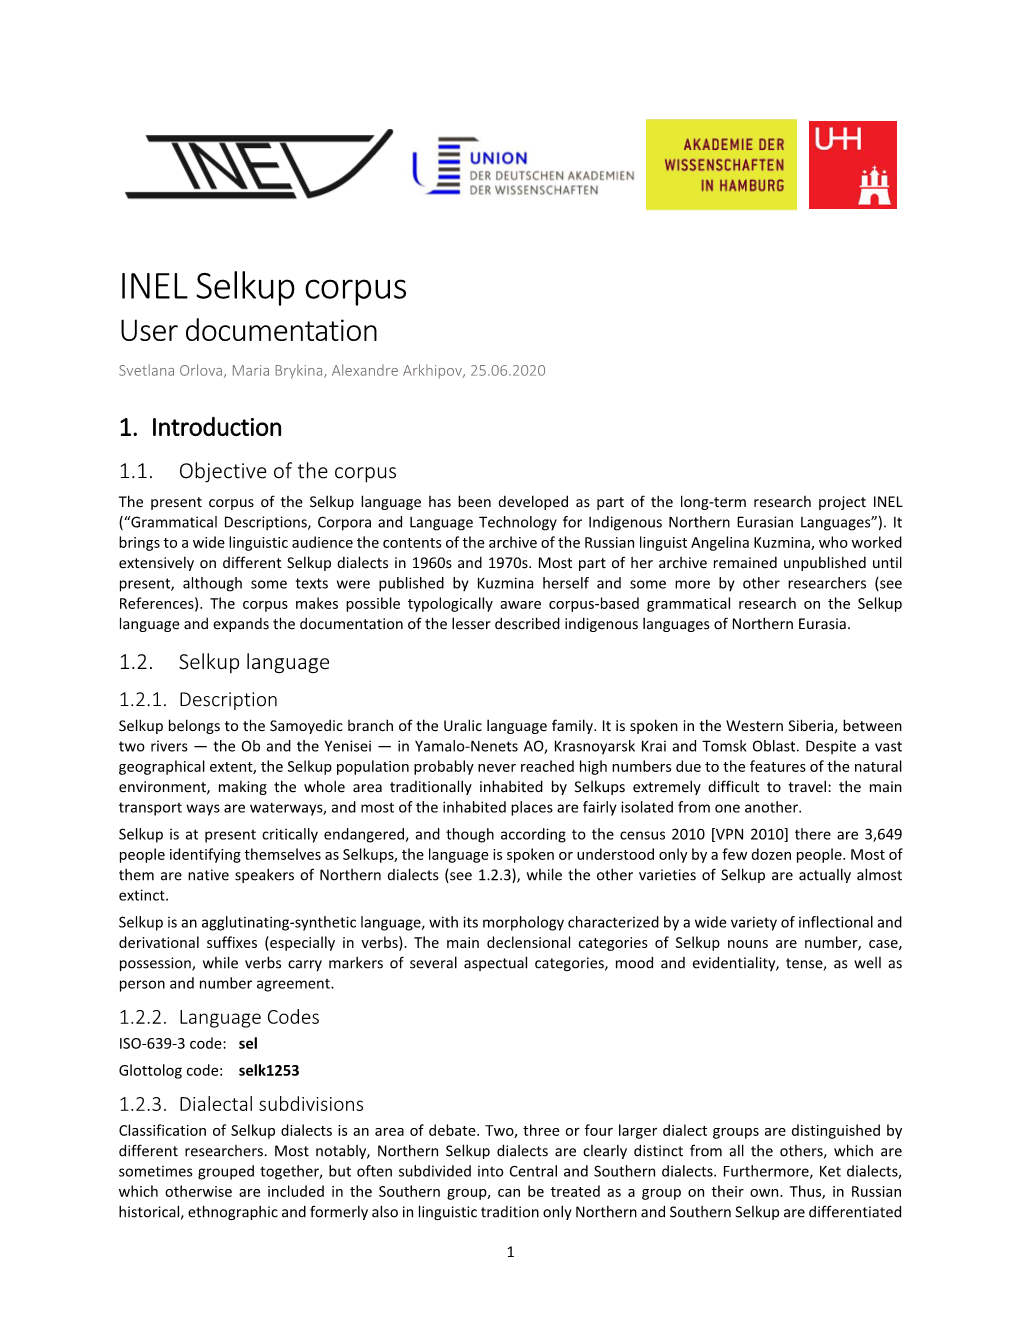 INEL Selkup Corpus User Documentation Svetlana Orlova, Maria Brykina, Alexandre Arkhipov, 25.06.2020